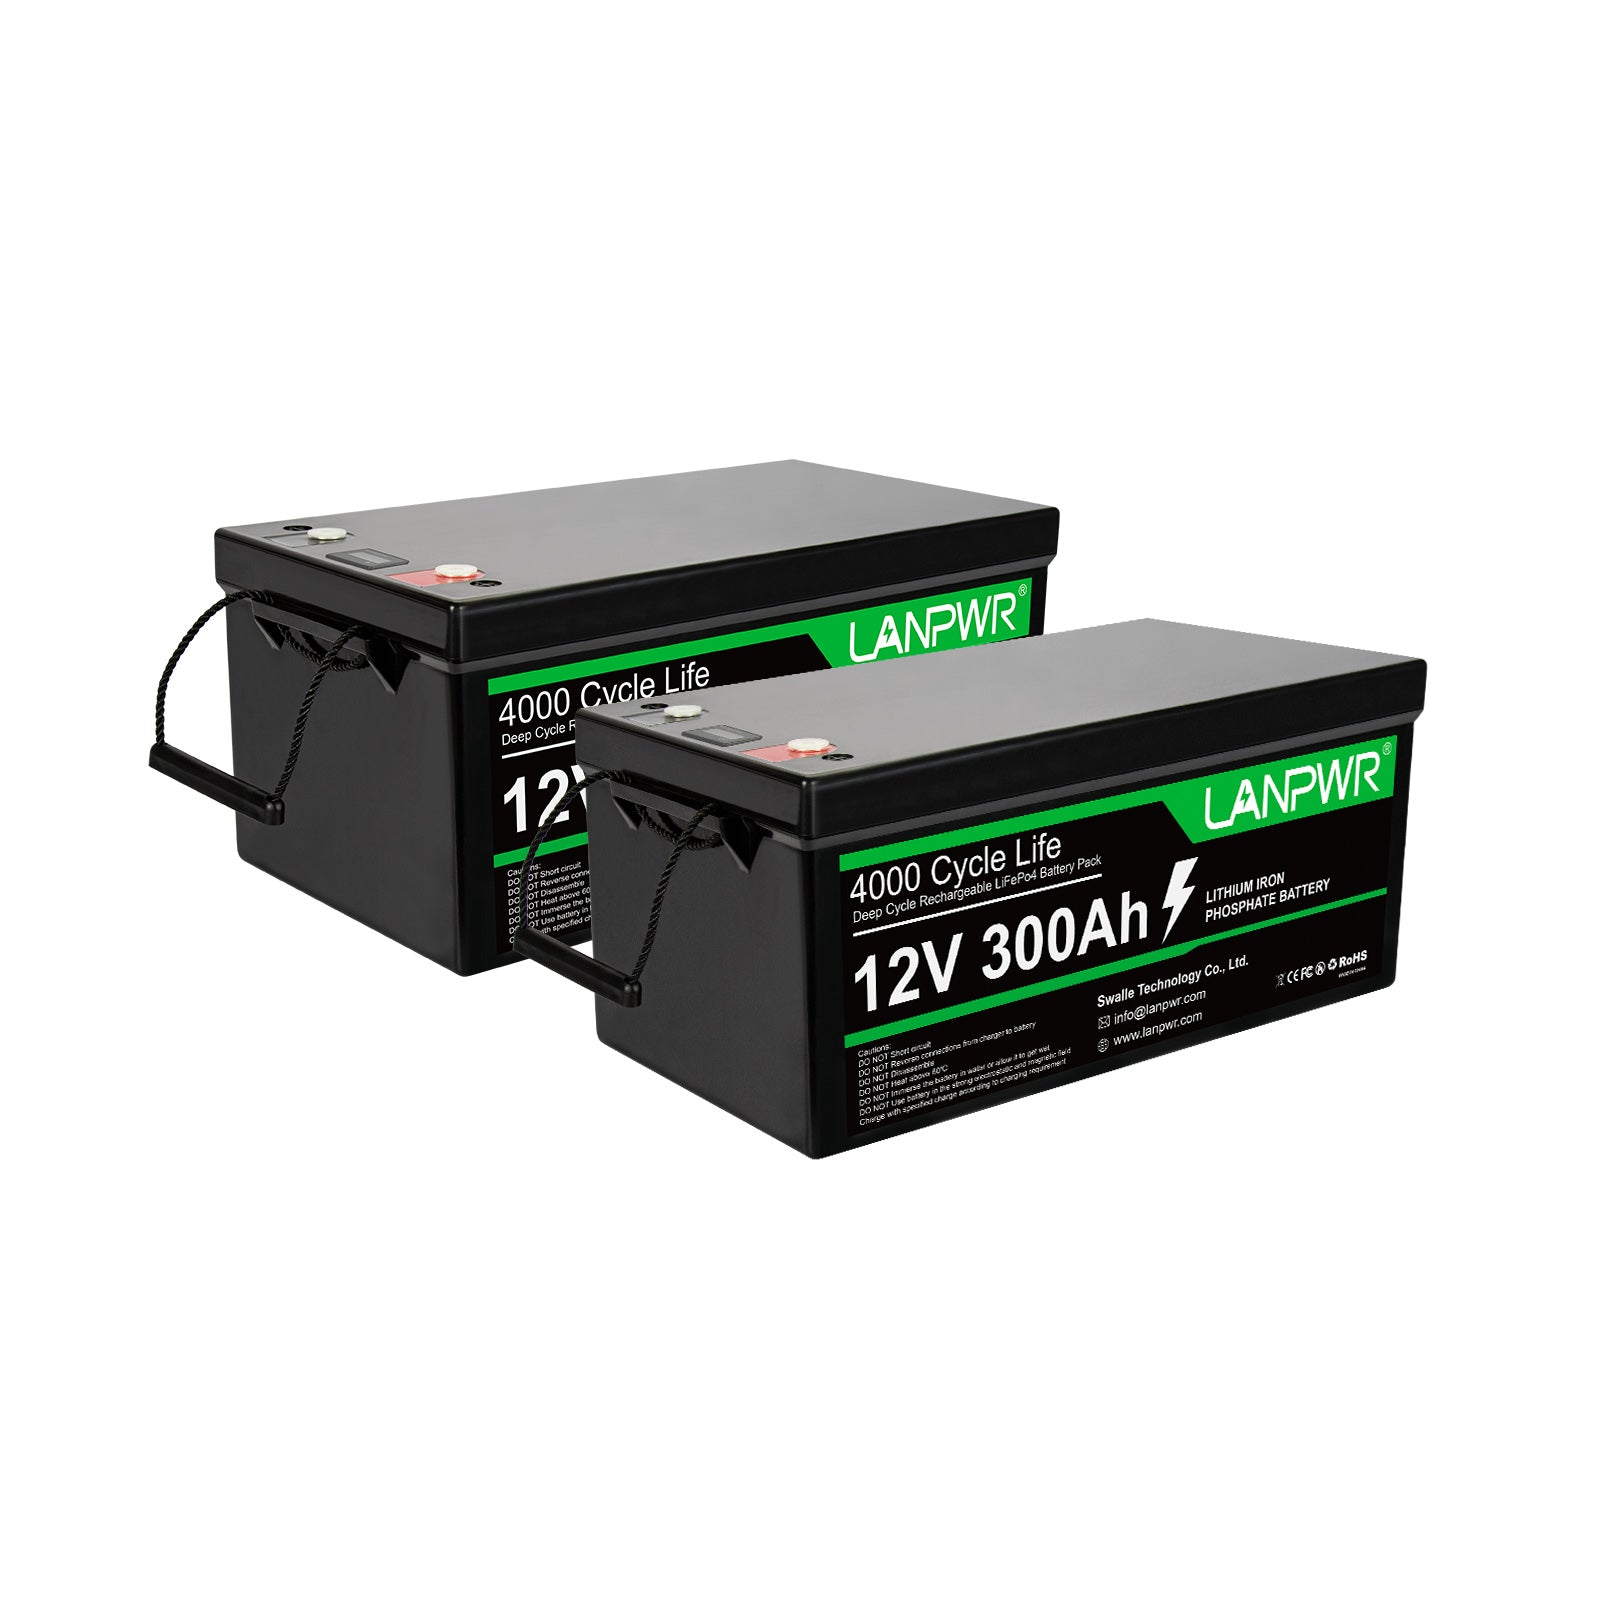 【Final Price €712.50】LANPWR 12V 300Ah LiFePO4 Battery, Maximum Load Power 2560W, 3840Wh Energy